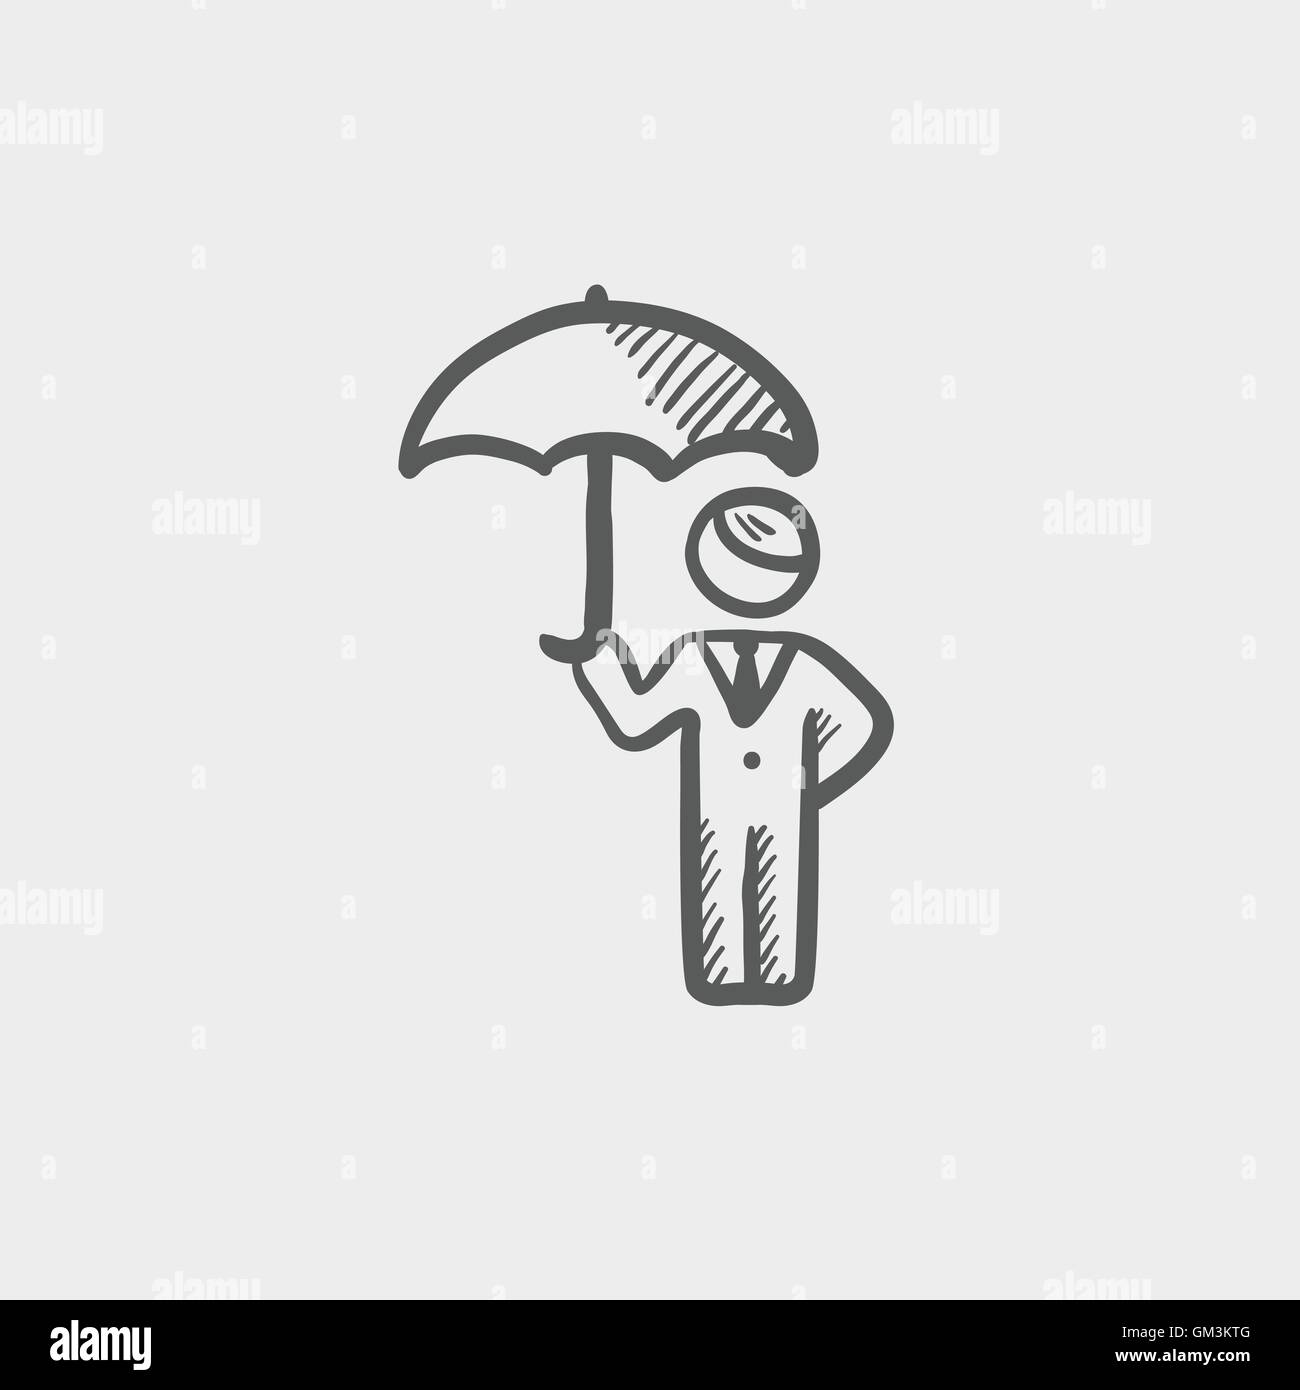 Man with umbrella sketch icon Stock Vector